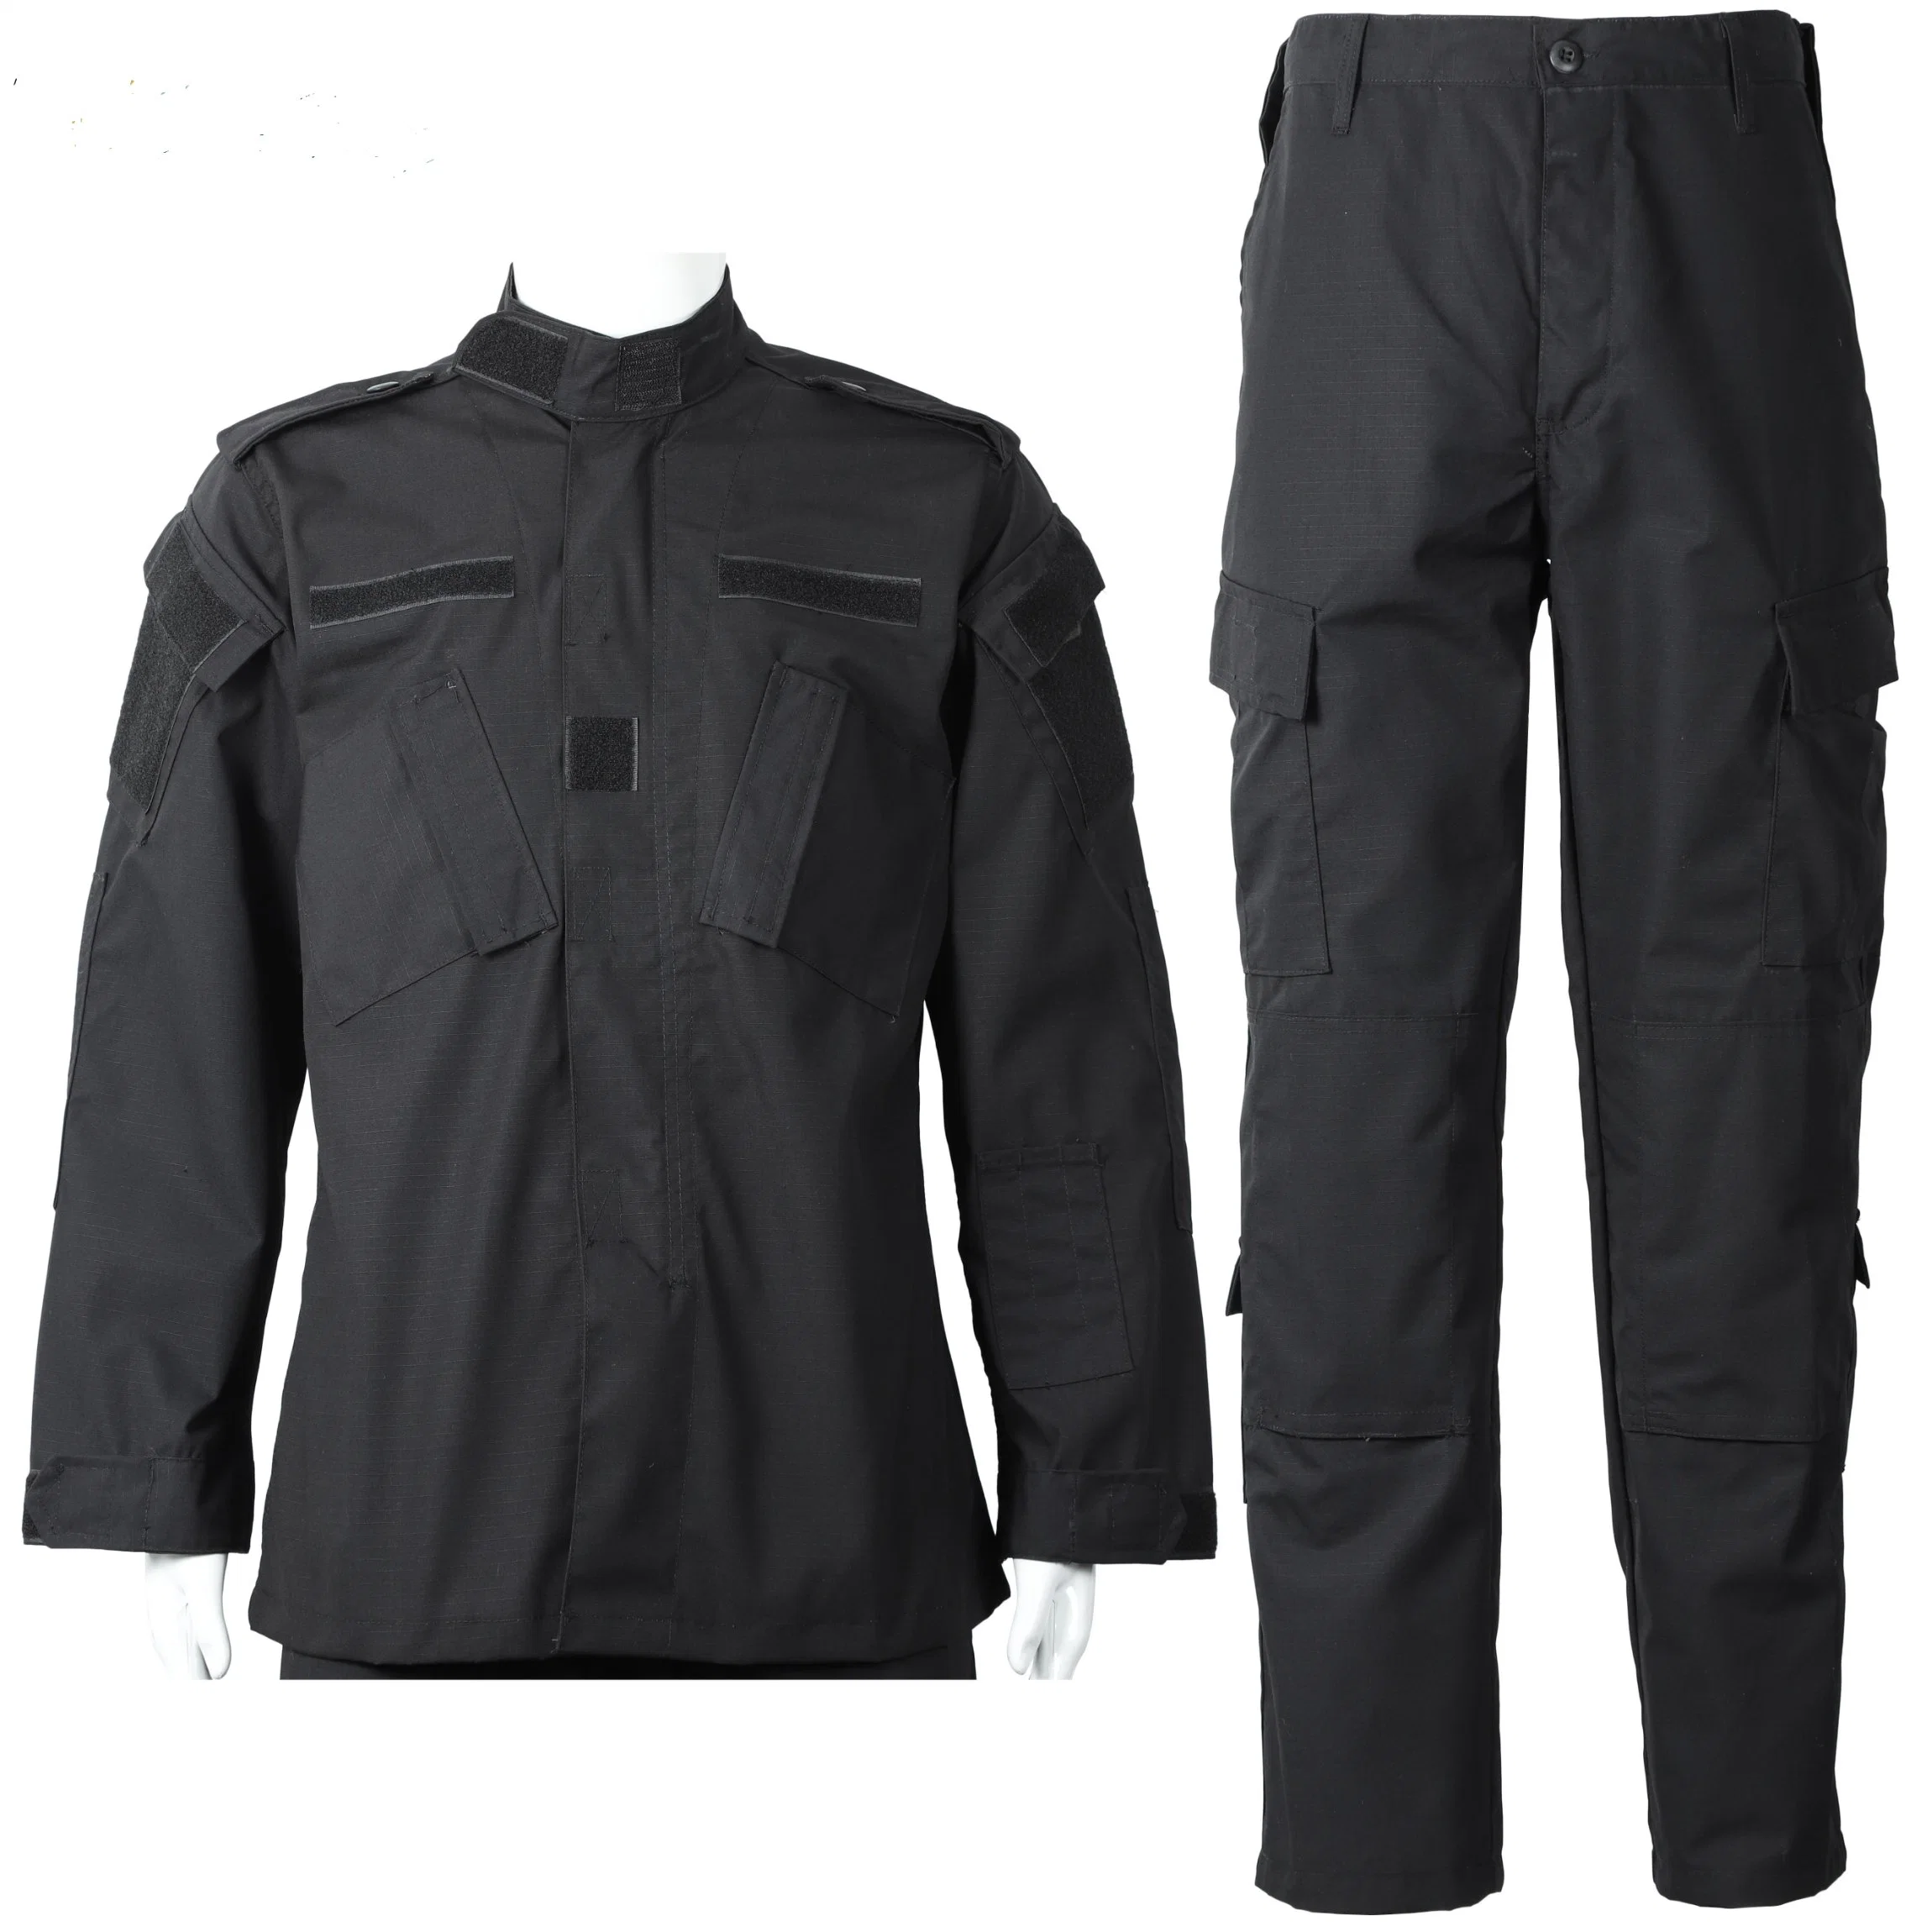 Combat Acu Uniform / Military Style Style Uniform / Sicherheit Wache Uniformen